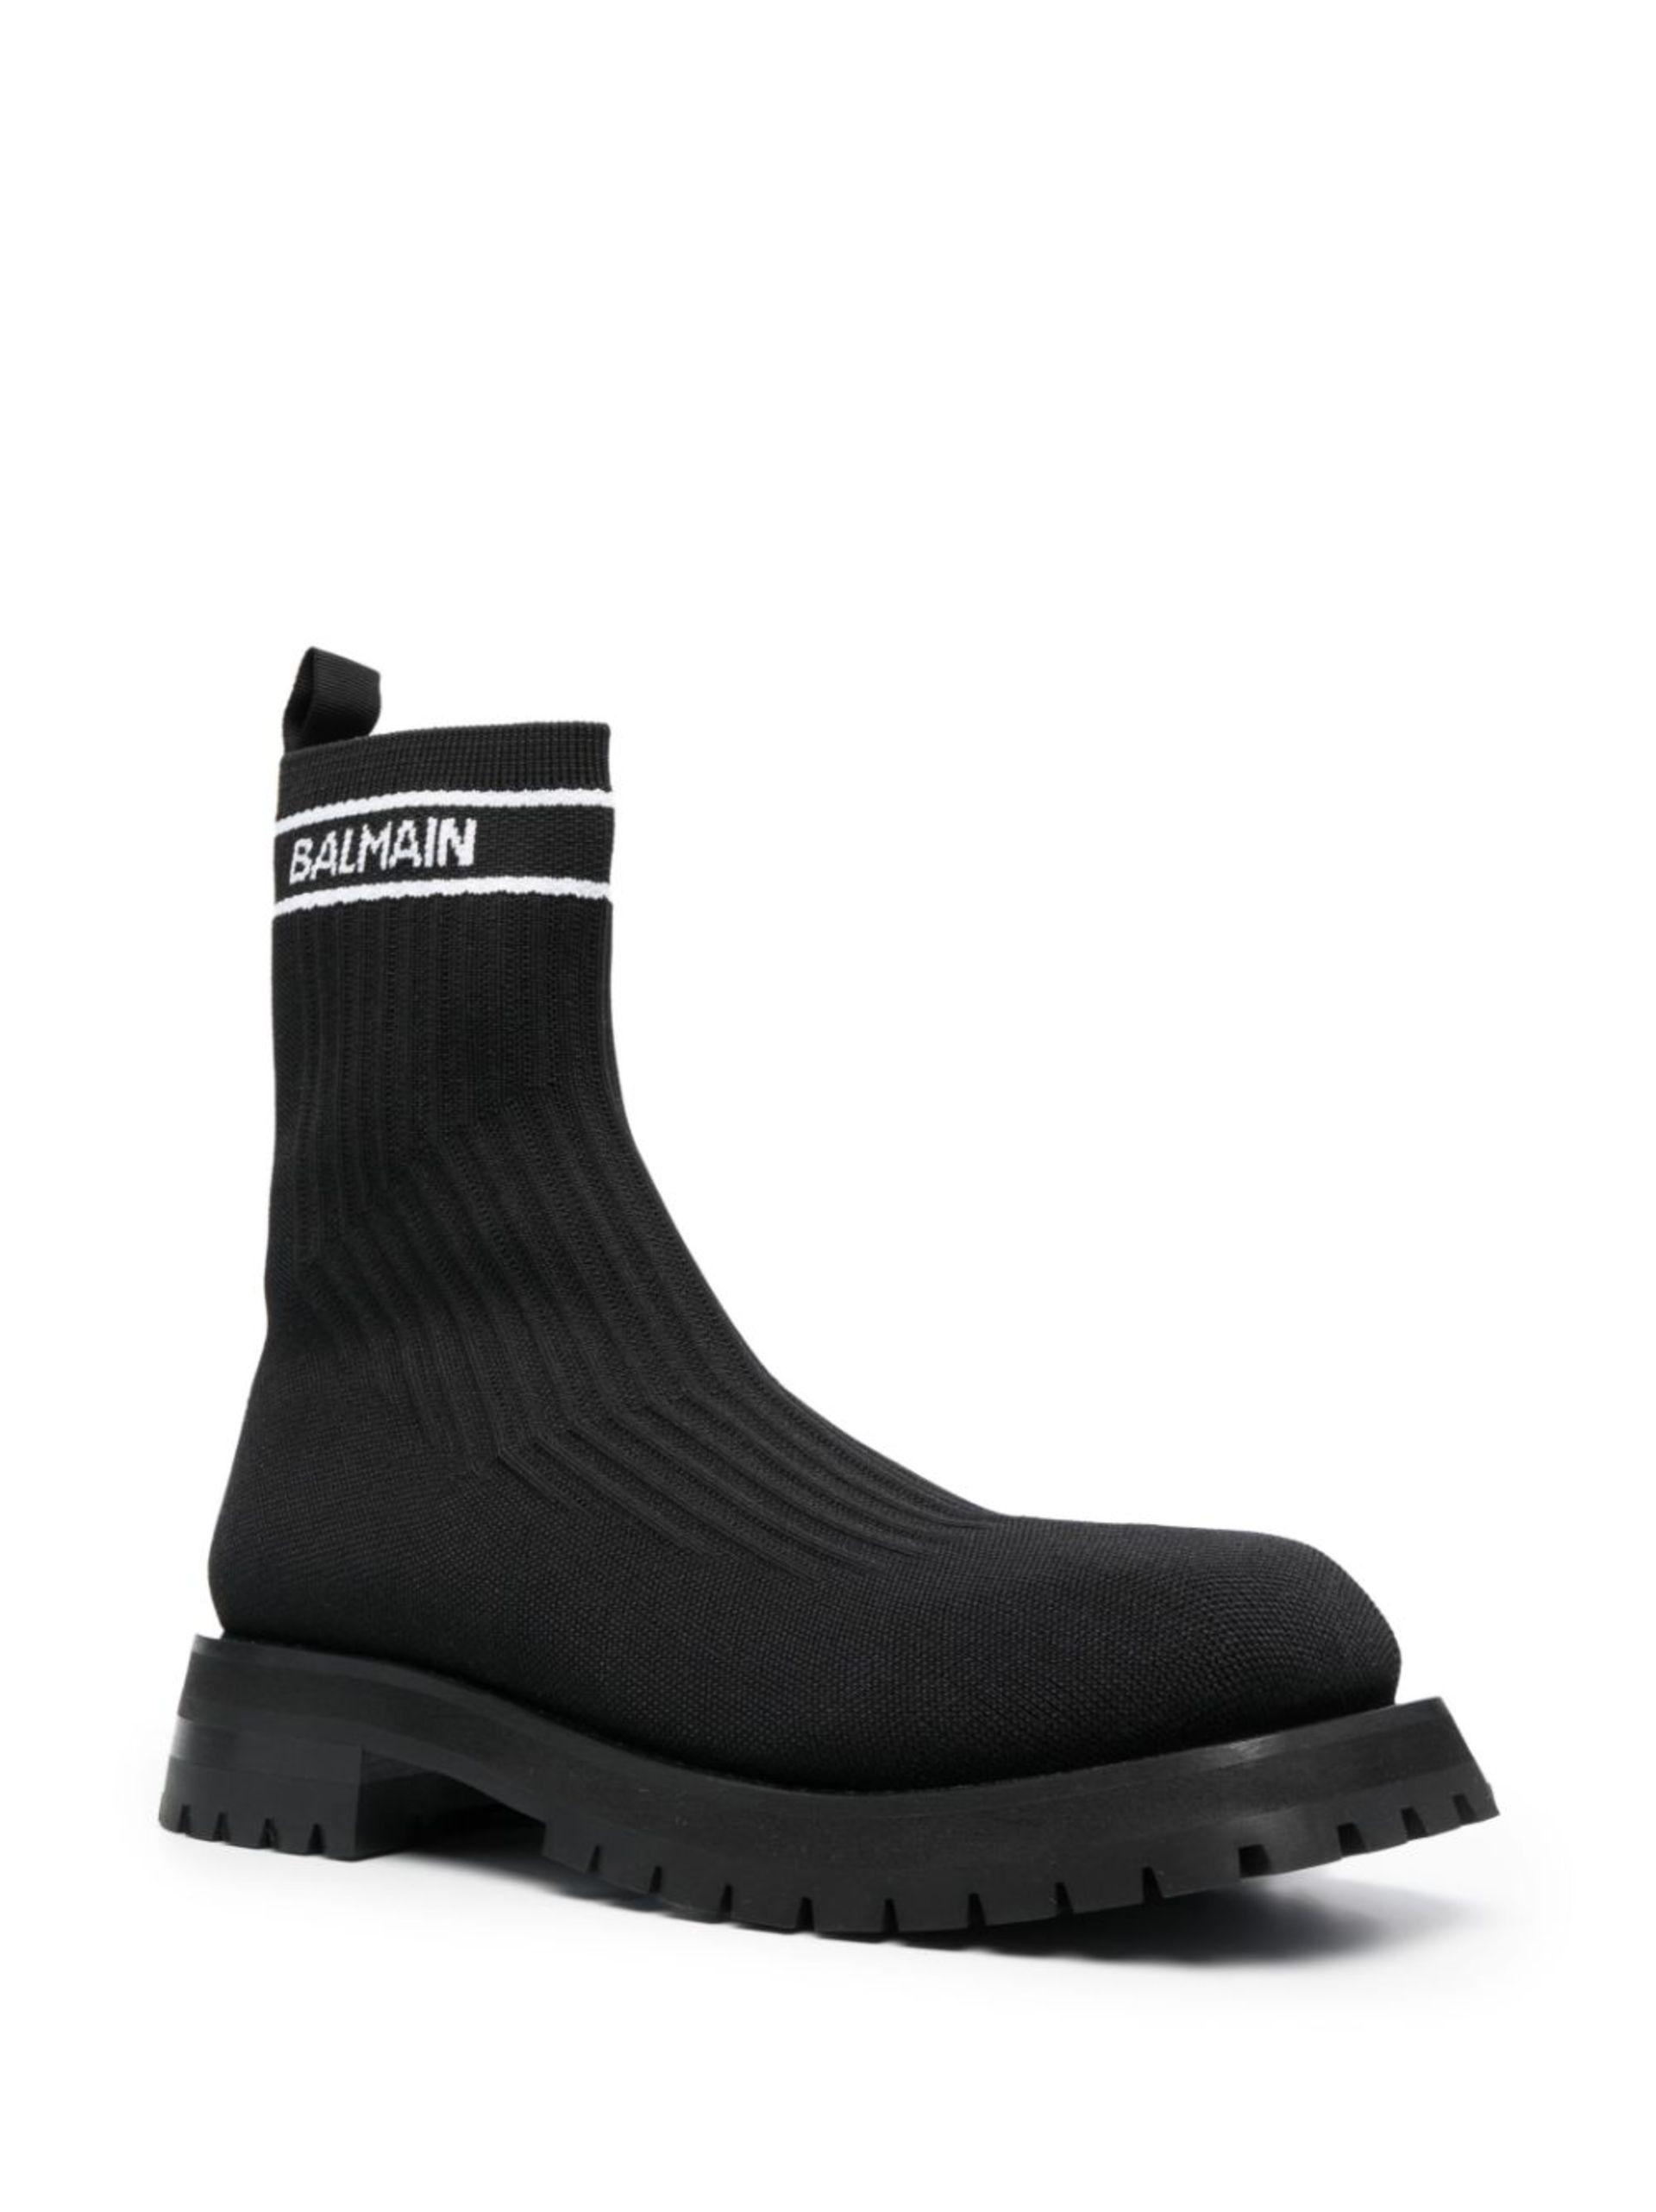 Balmain Sock Boots in for Men | Lyst